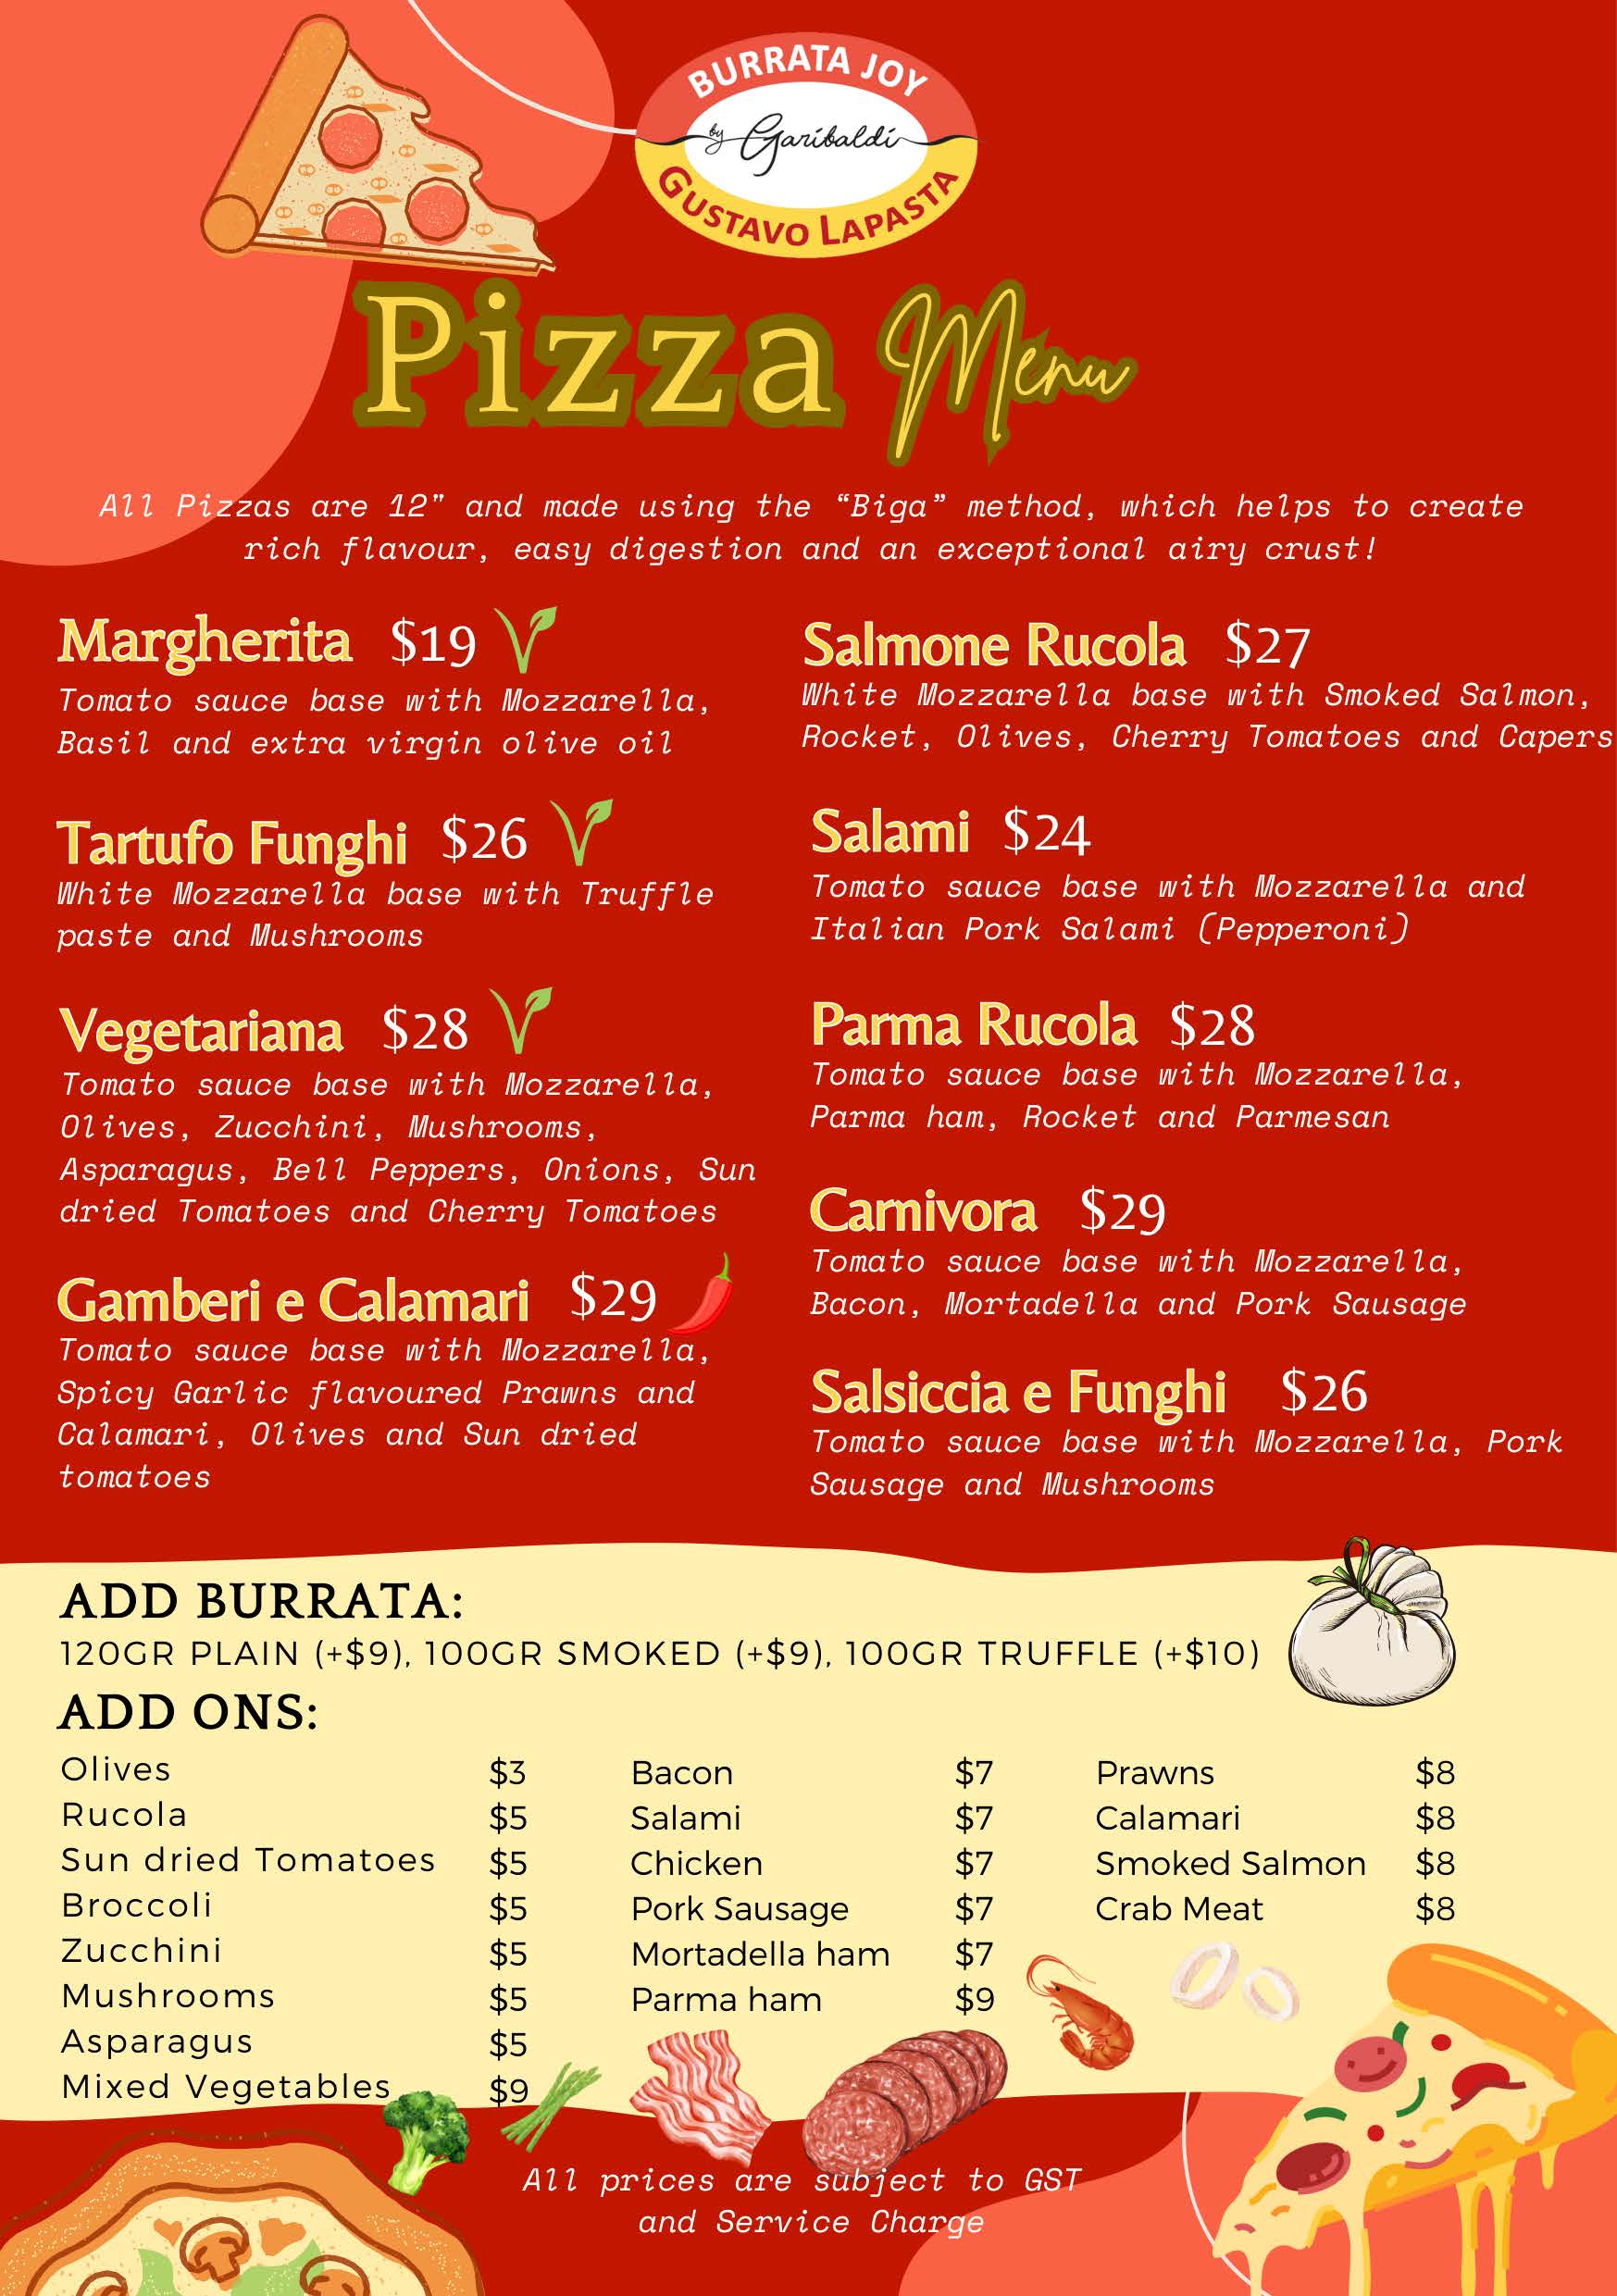 Burrata Joy & Gustavo Lapasta Pizza Menu